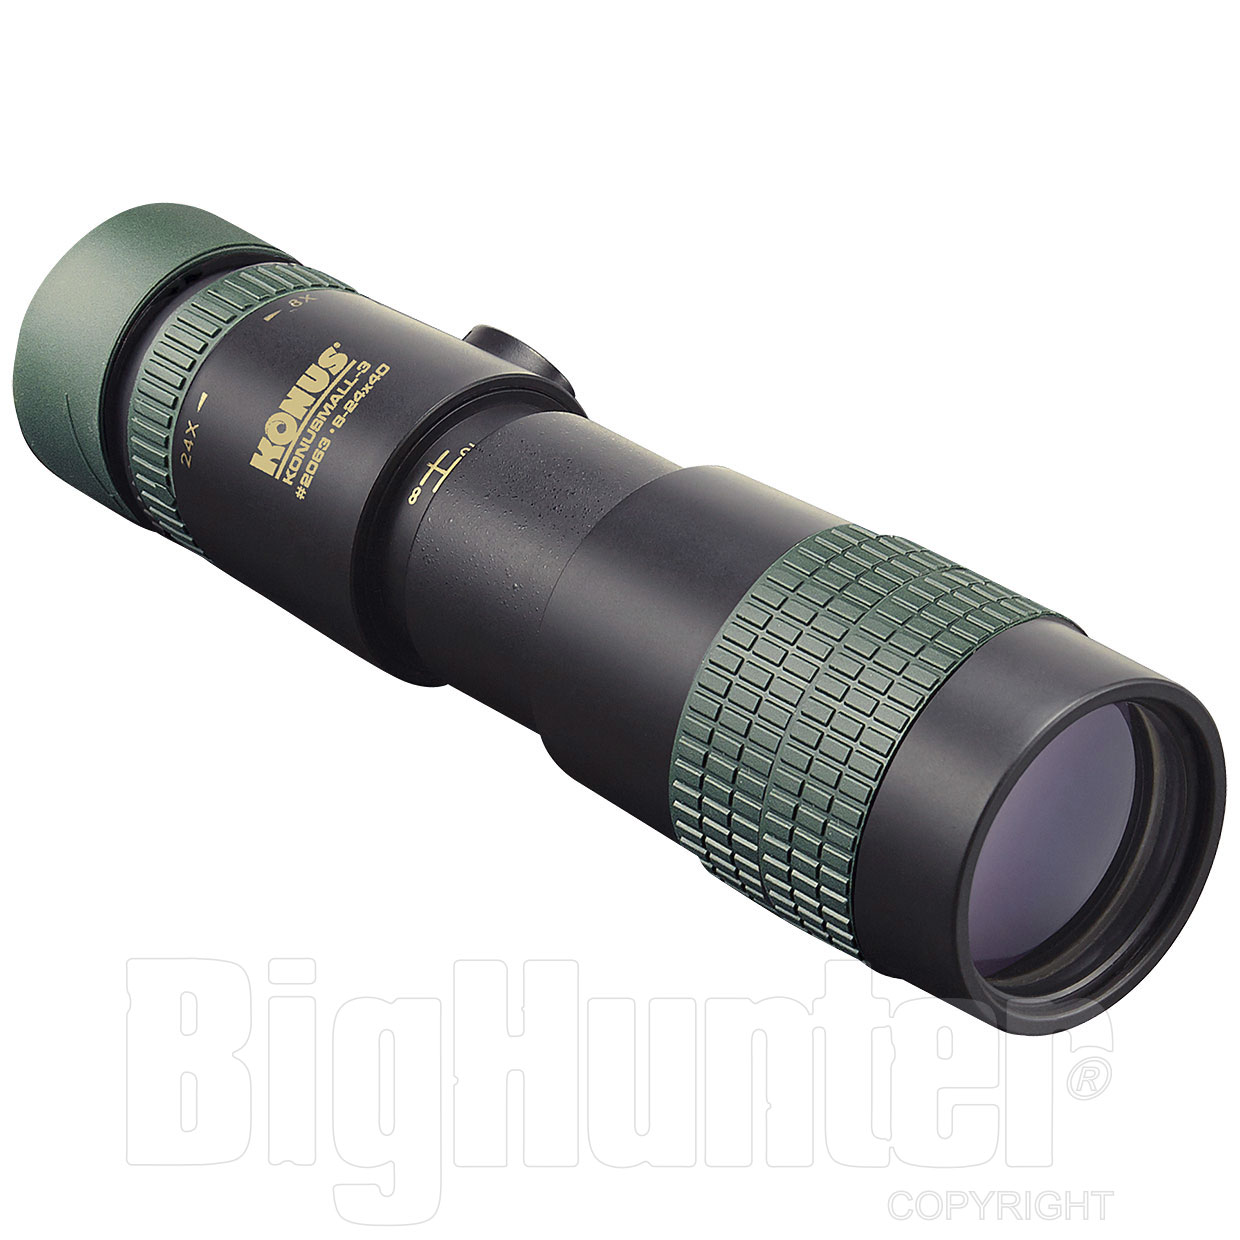 Konus Monocolo Spotter Konusmall-3 8-24x40mm